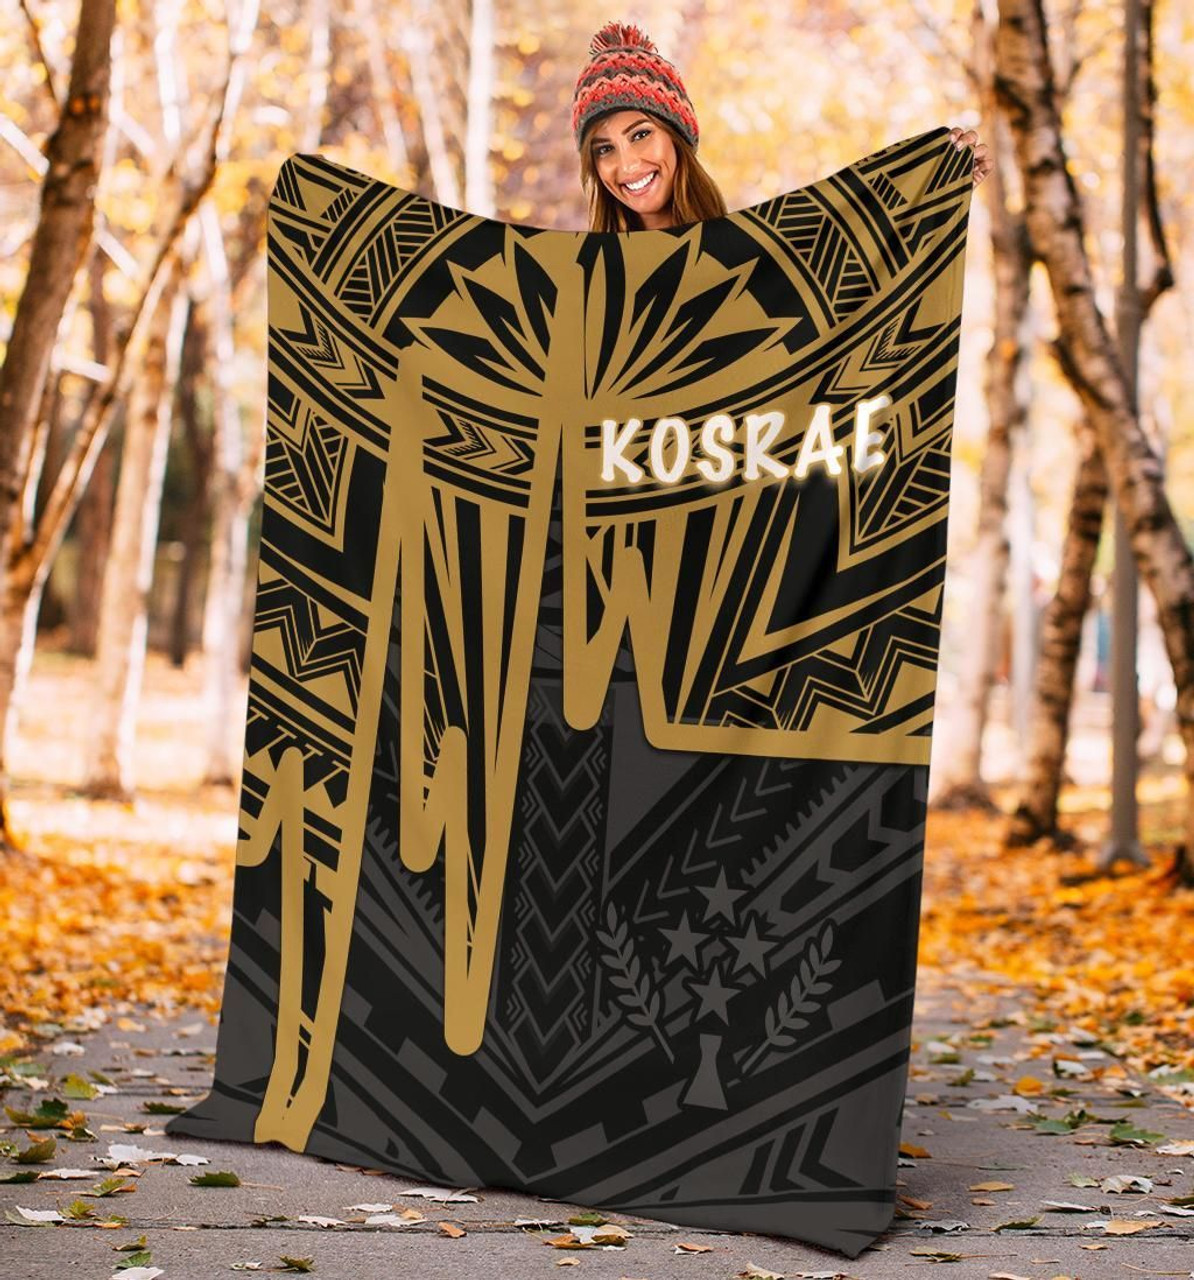 Kosrae Premium Blanket - Kosrae Seal In Heartbeat Patterns Style (Gold) 2